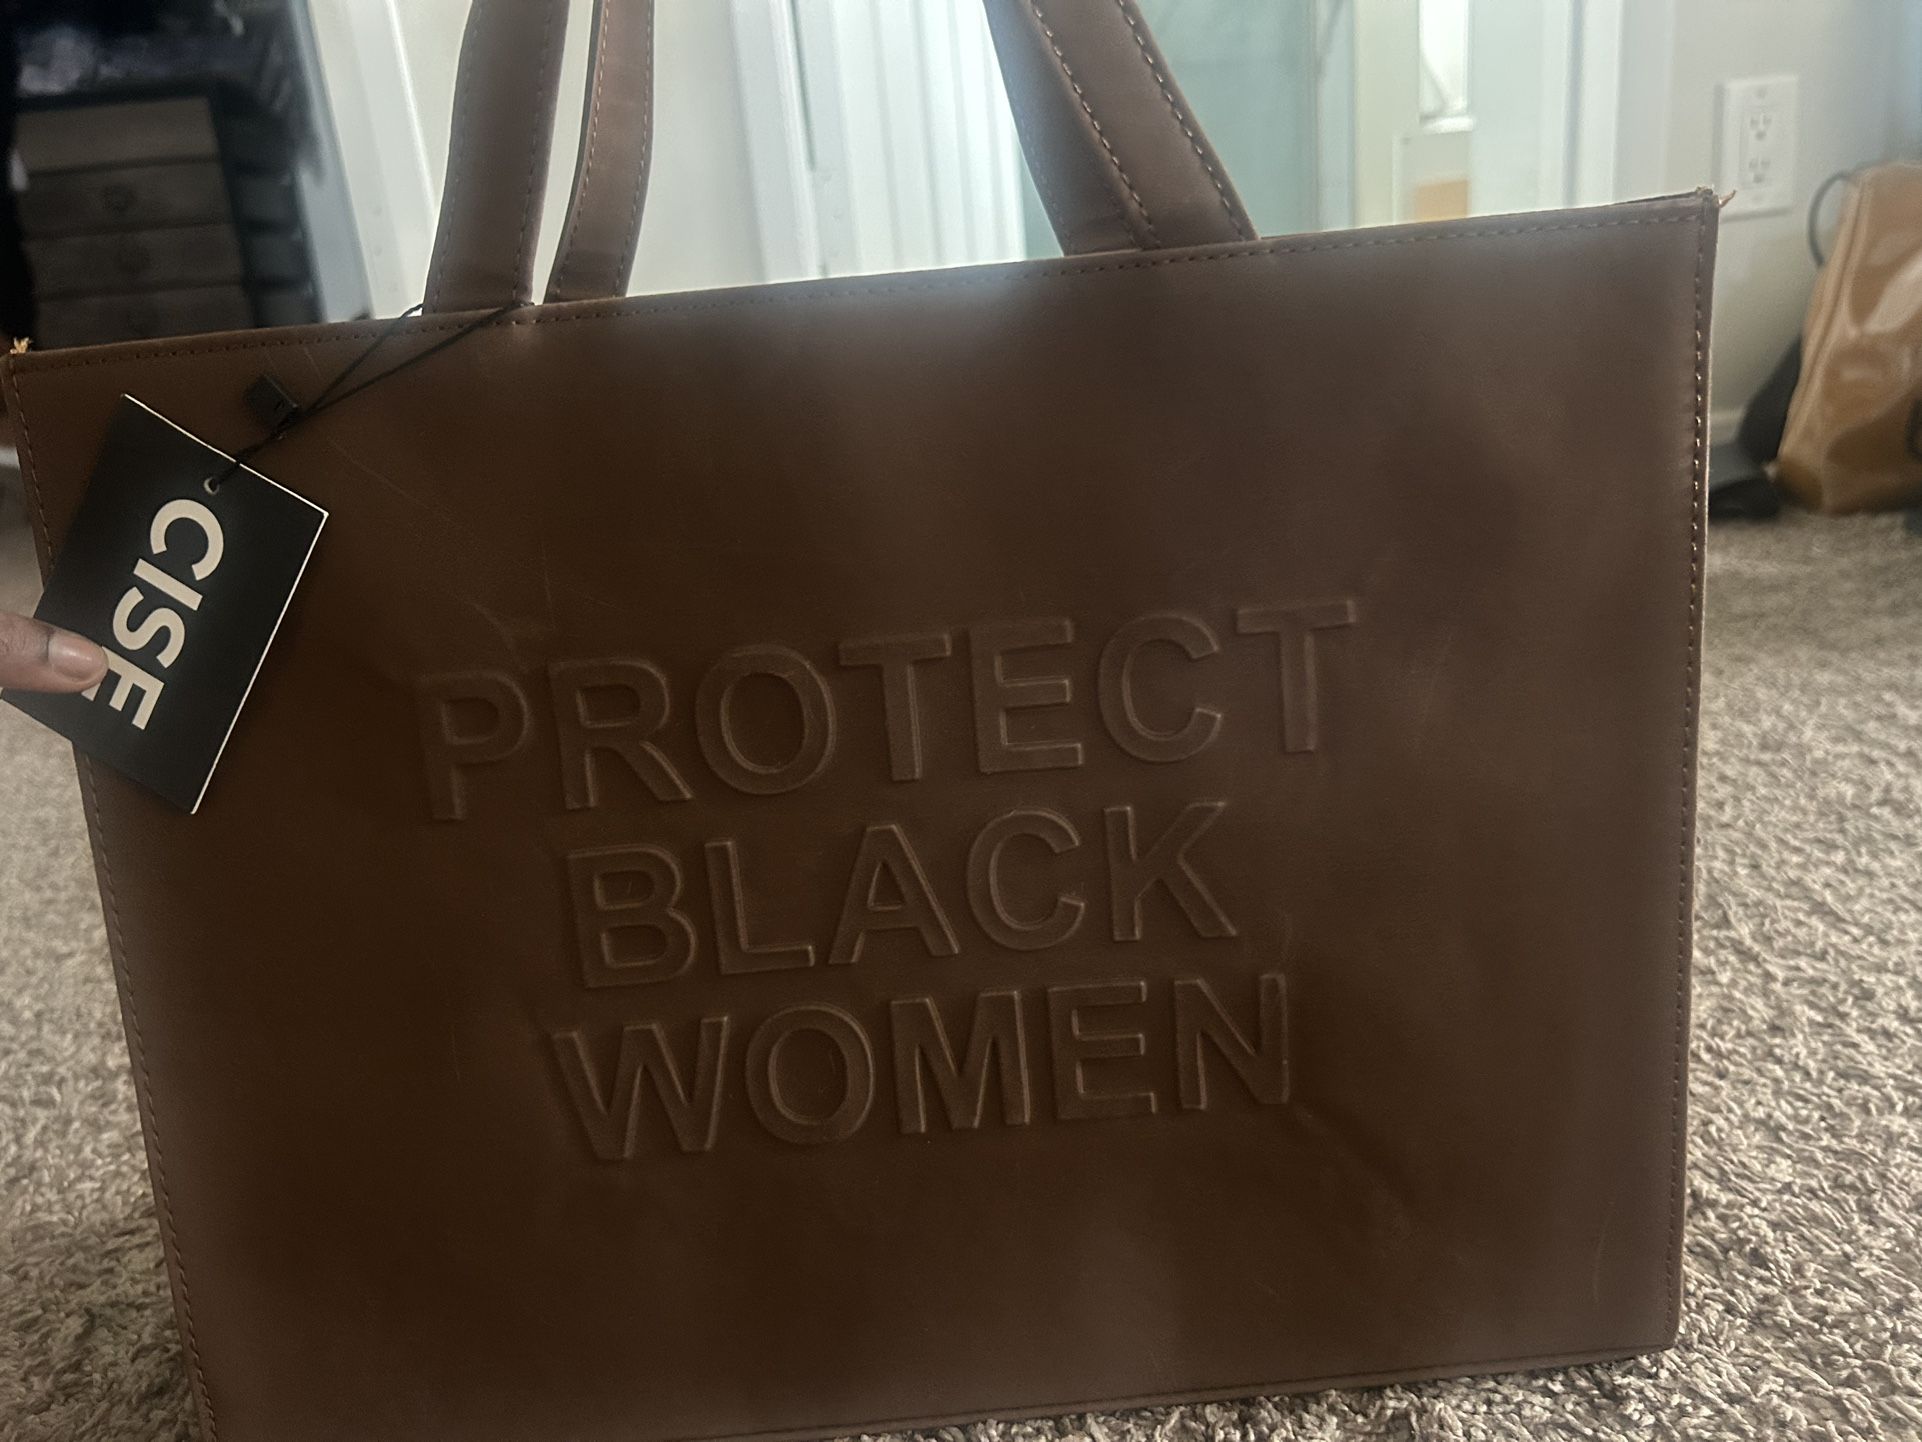 Protect Black Women Bag